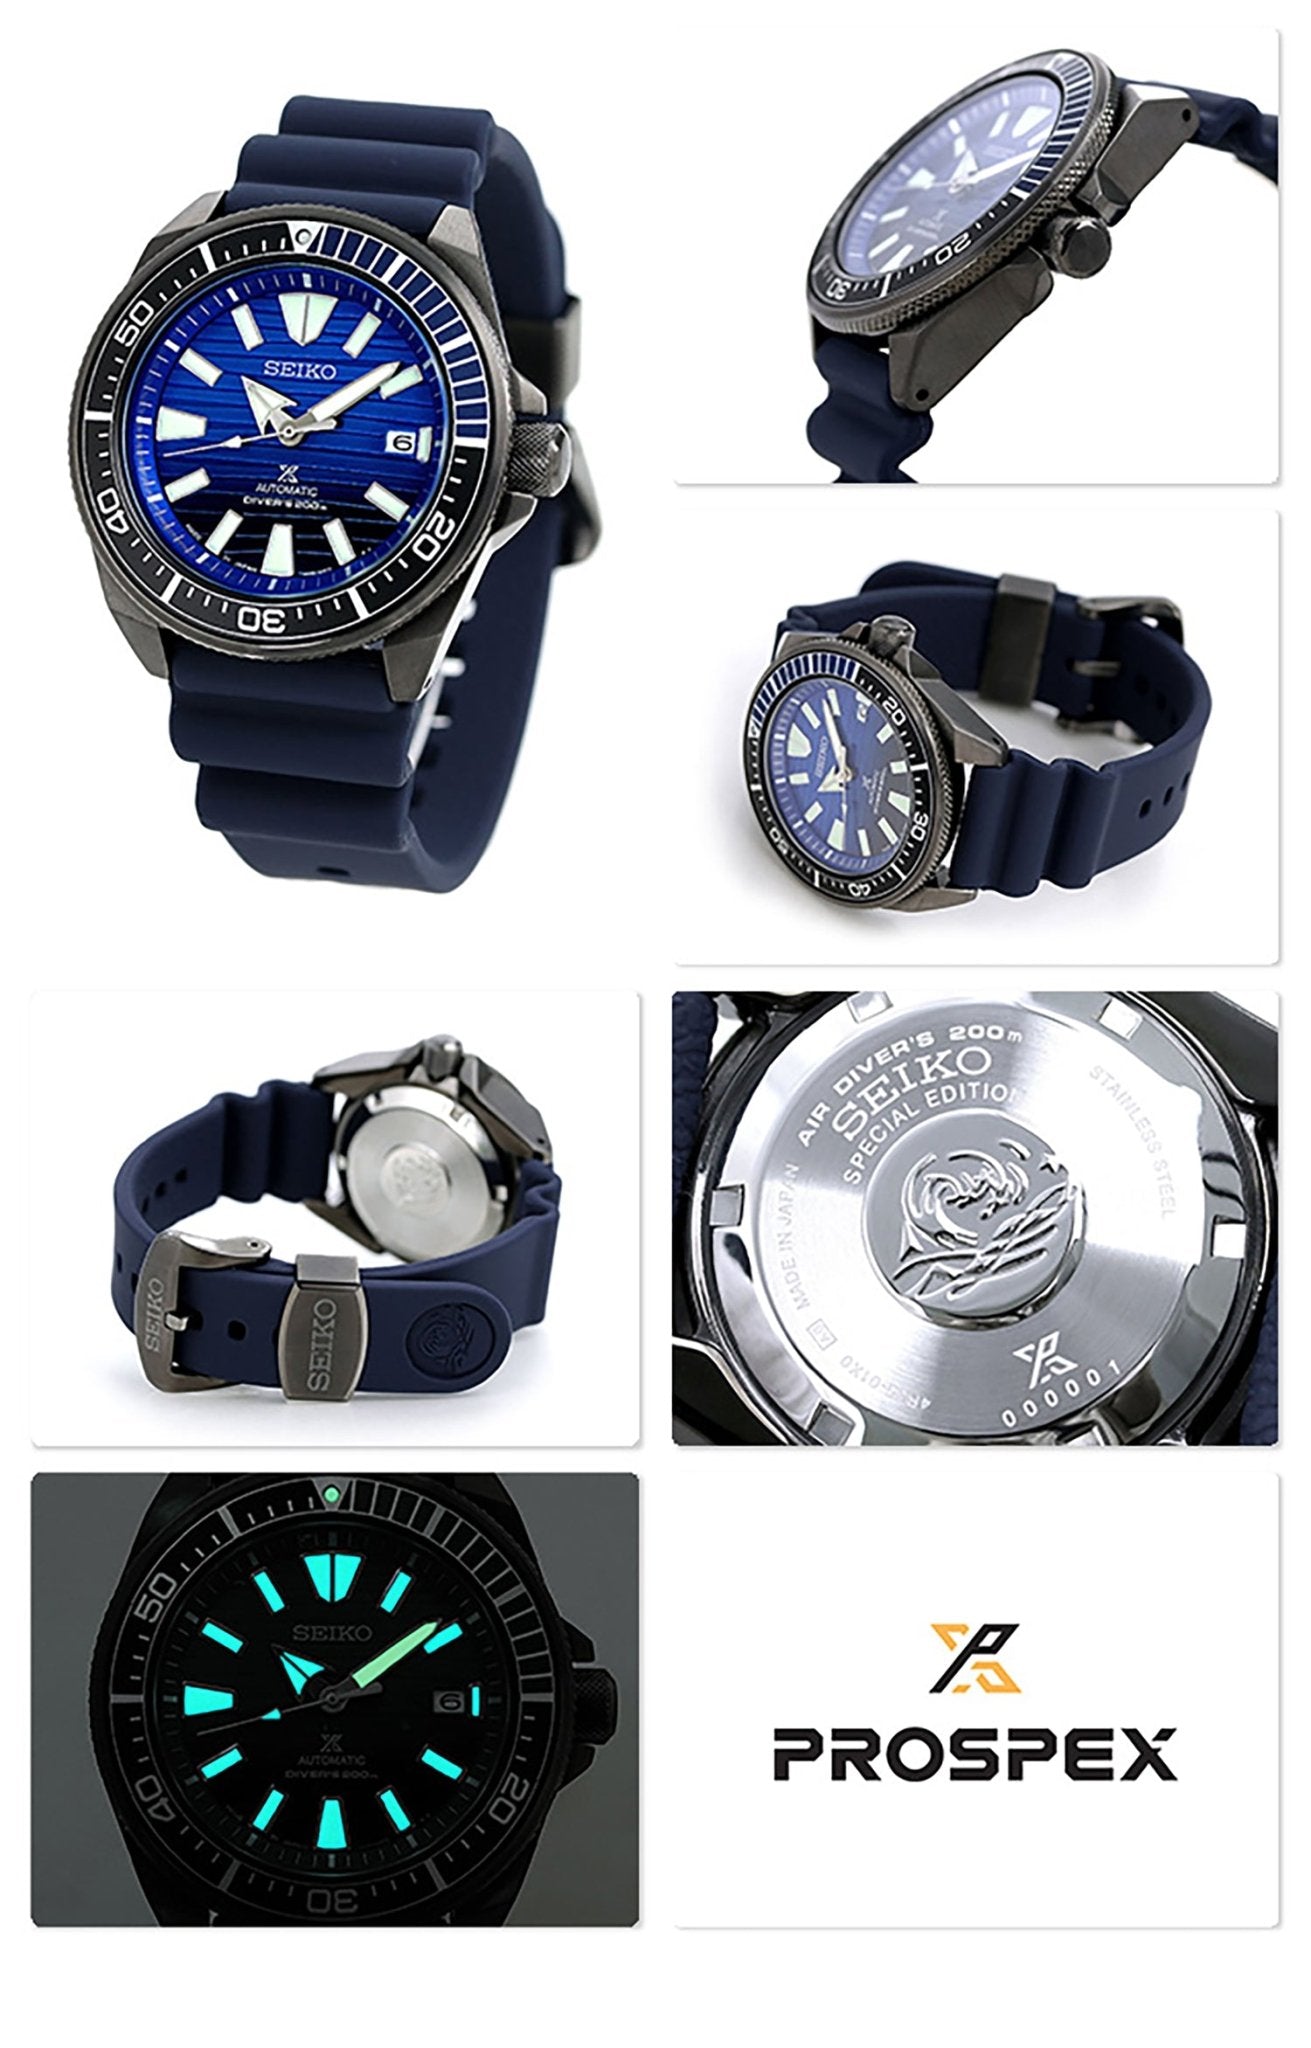 SEIKO PROSPEX Samurai SBDY025 Dive Watch 200m Made in Japan – japan-select